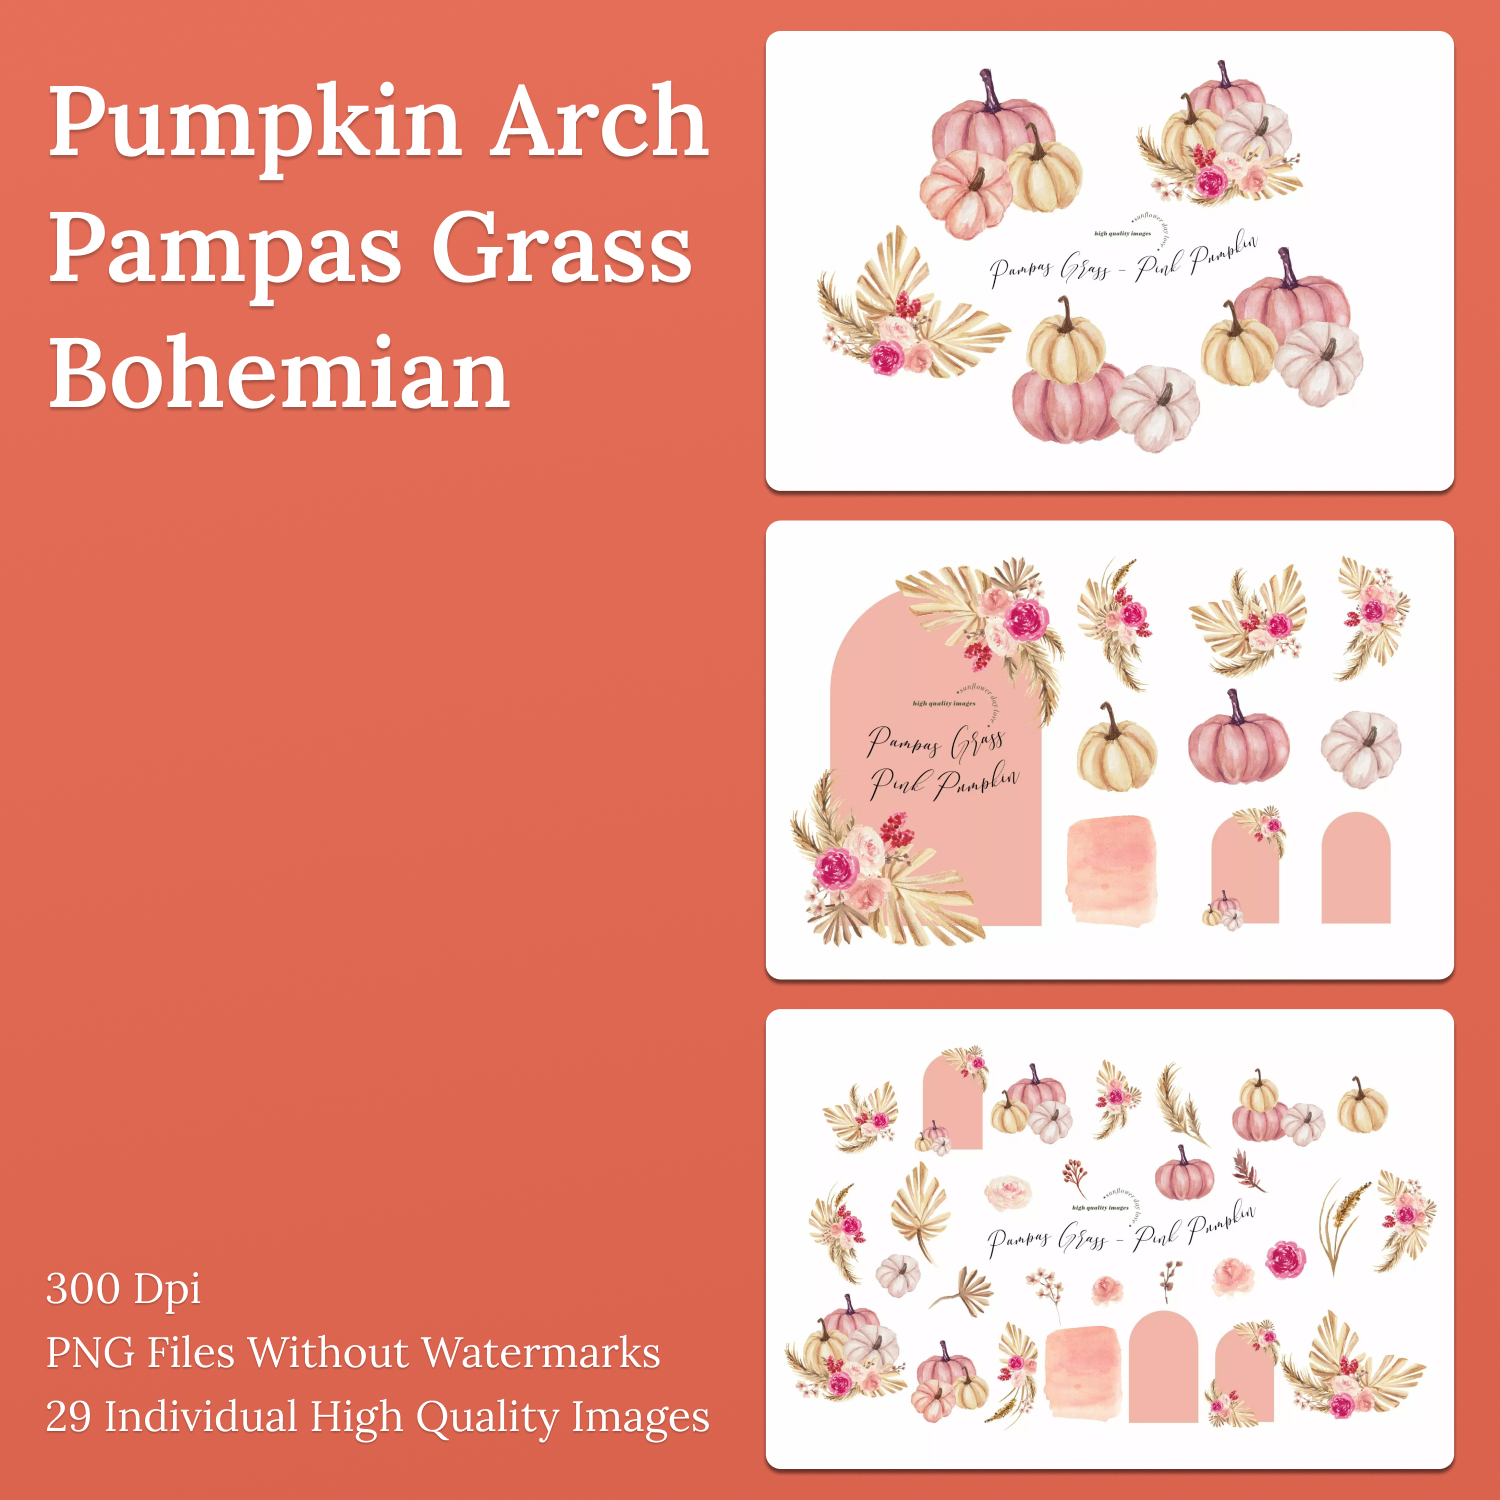 Prints of pumpkin arch pampas grass bohemian.